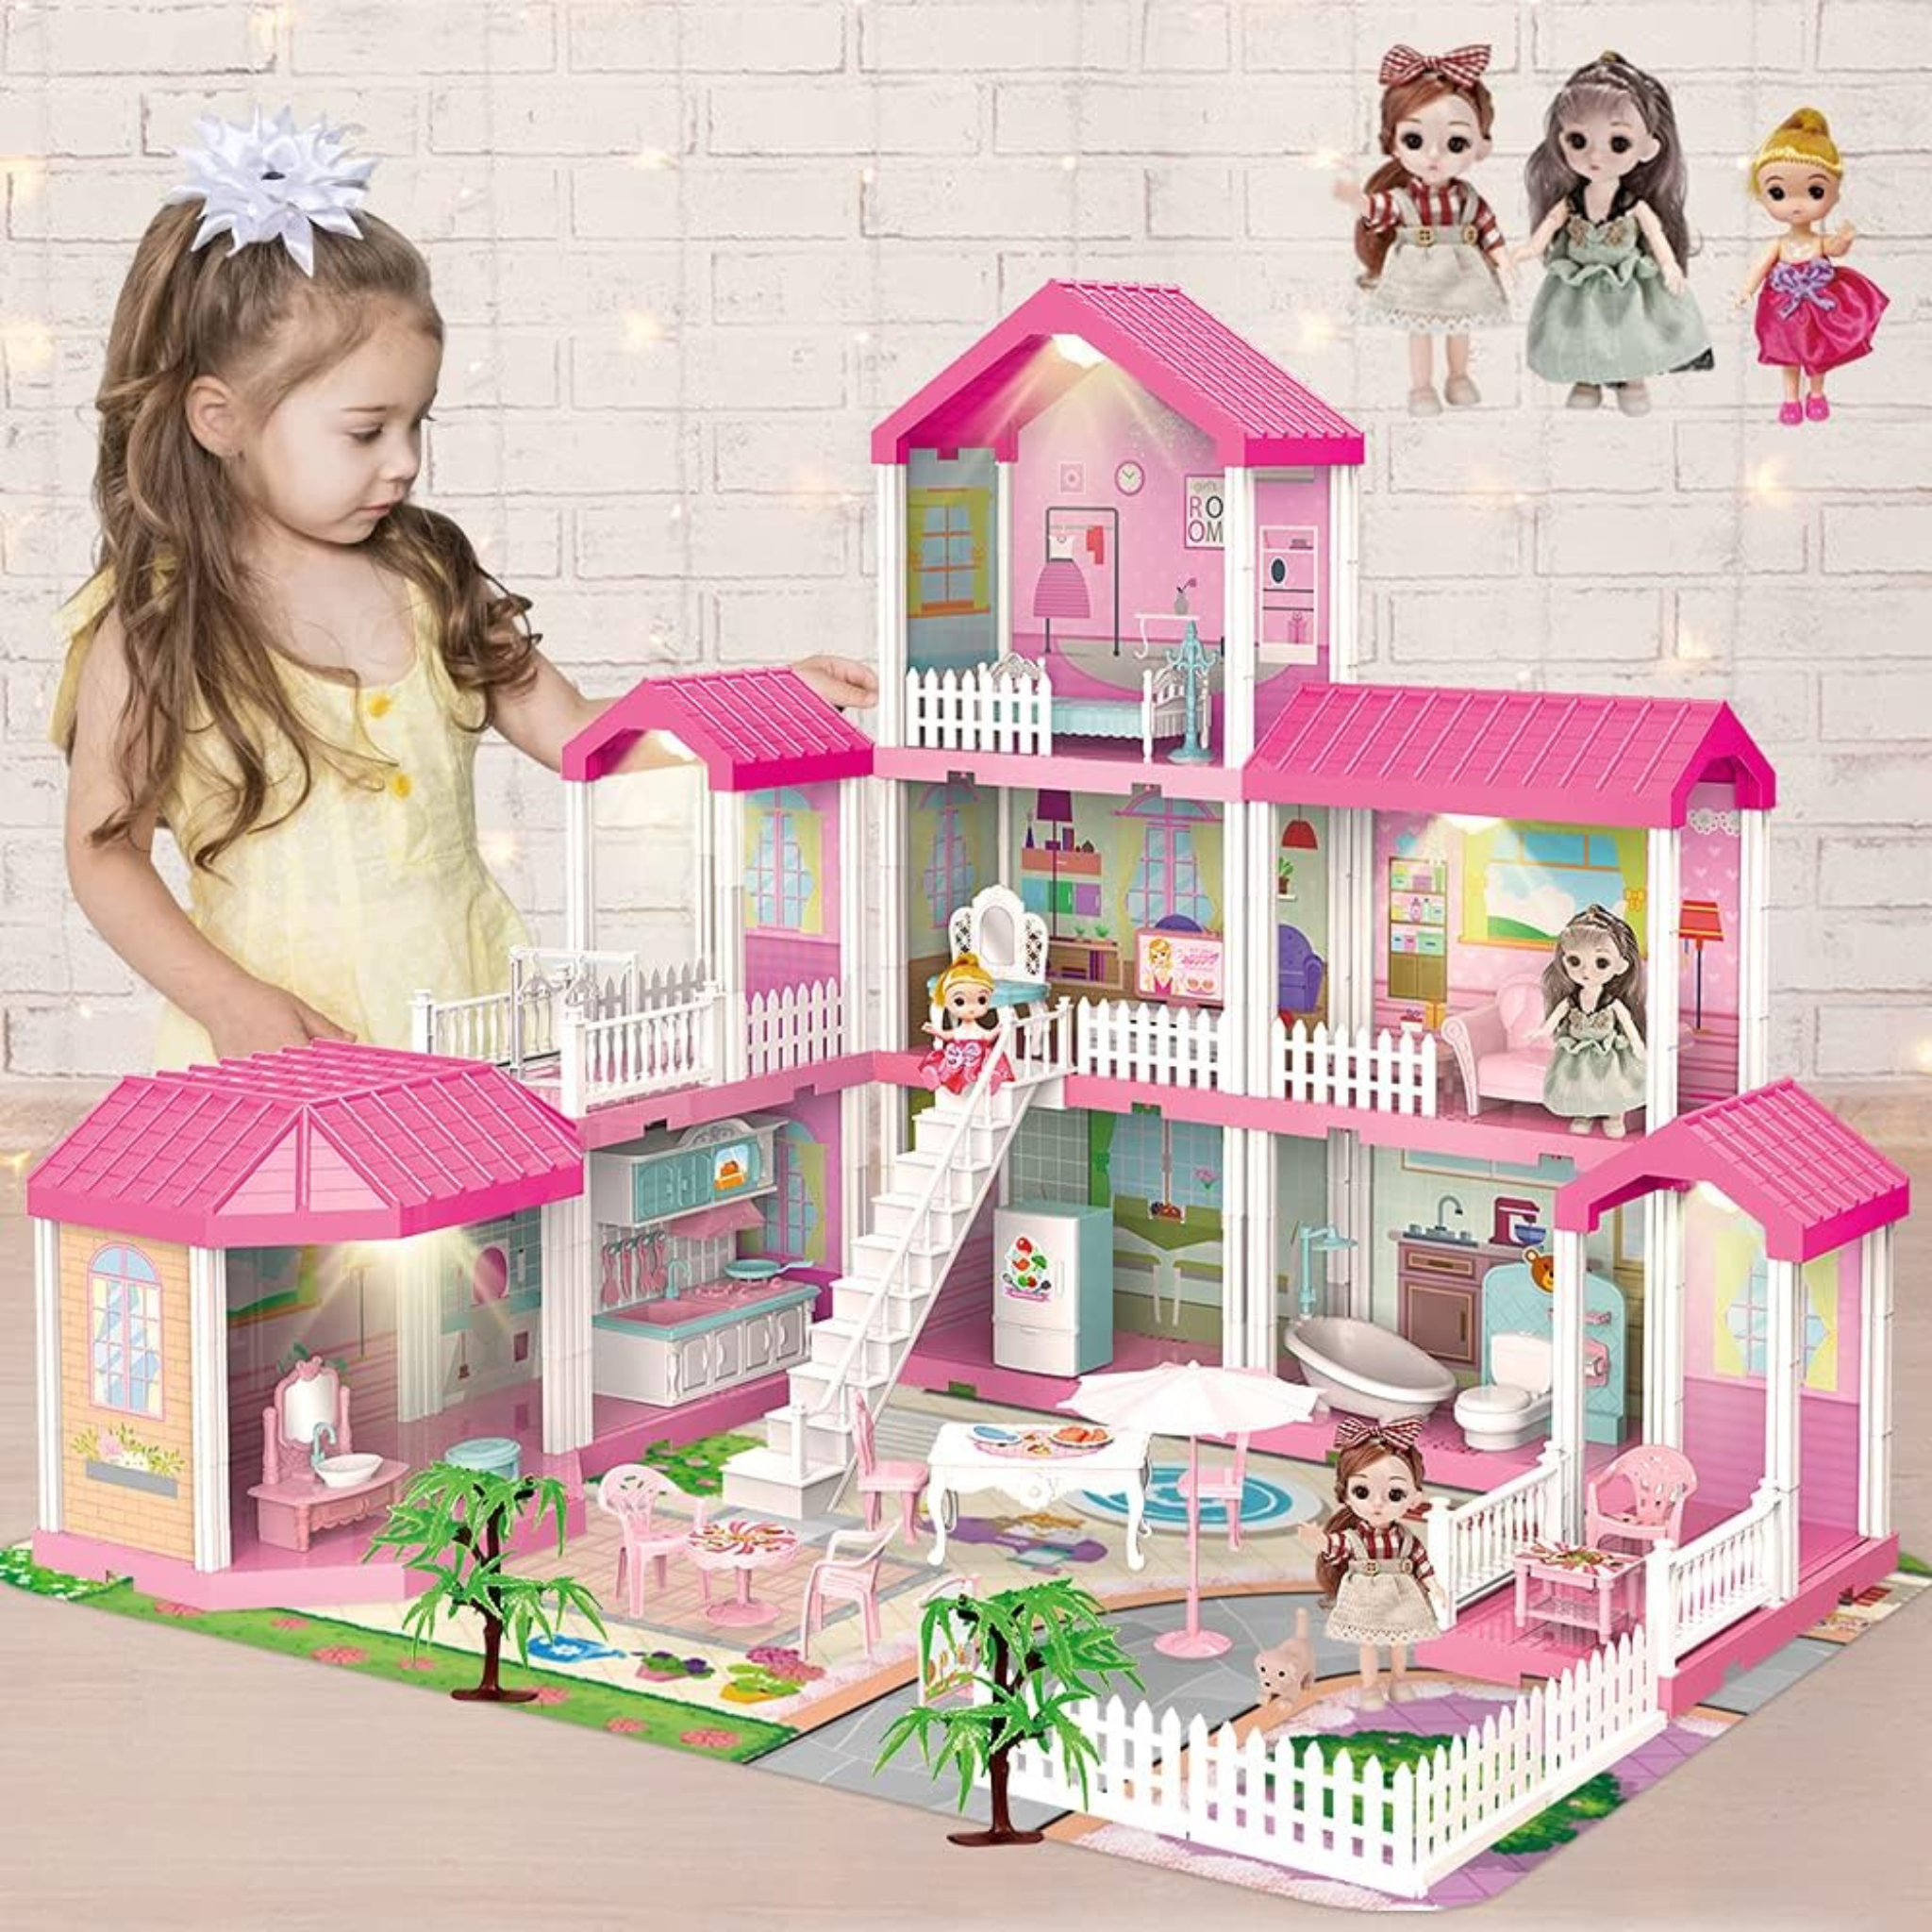 Dollhouse Building Toy Set